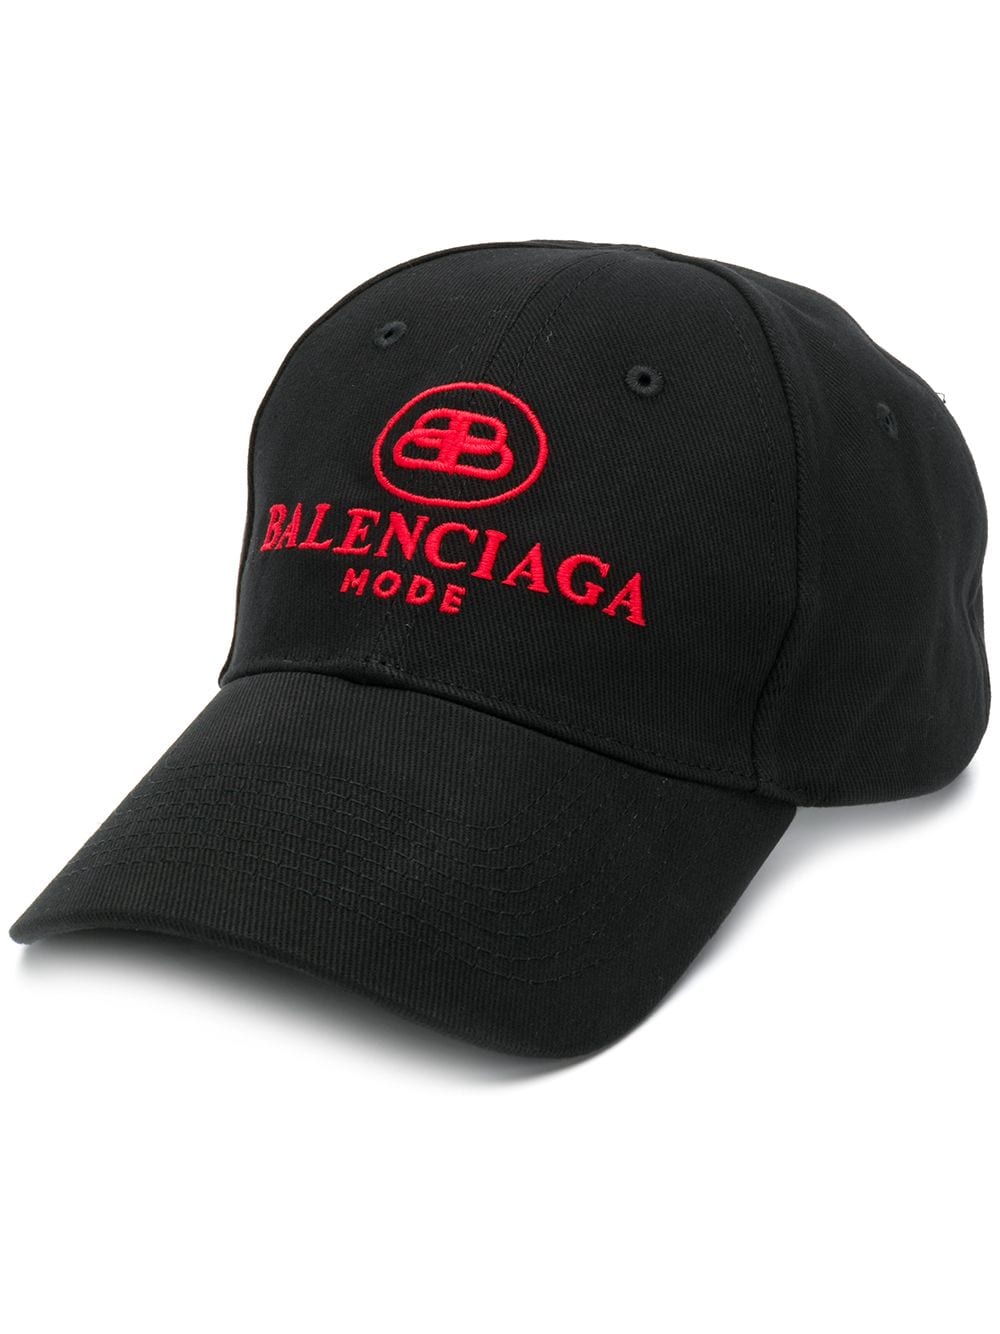 фото Balenciaga кепка с вышитым логотипом